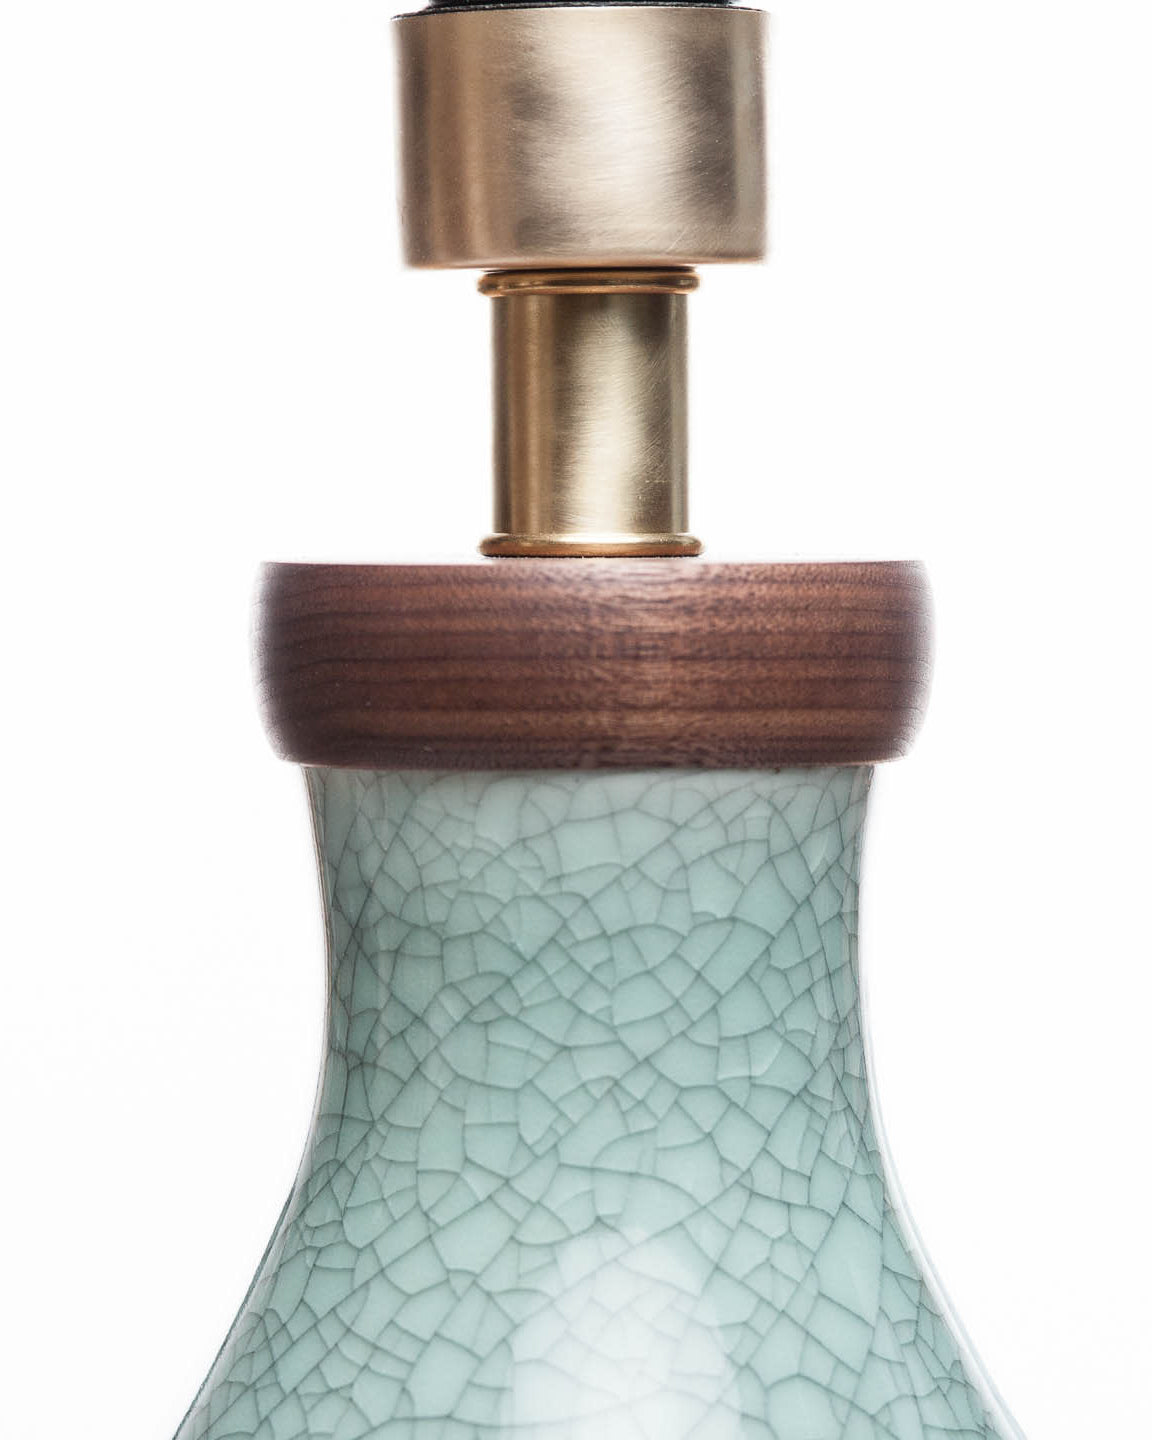 Lawrence & Scott Scarlett Porcelain Table Lamp in Aqua Crackle (Sample)